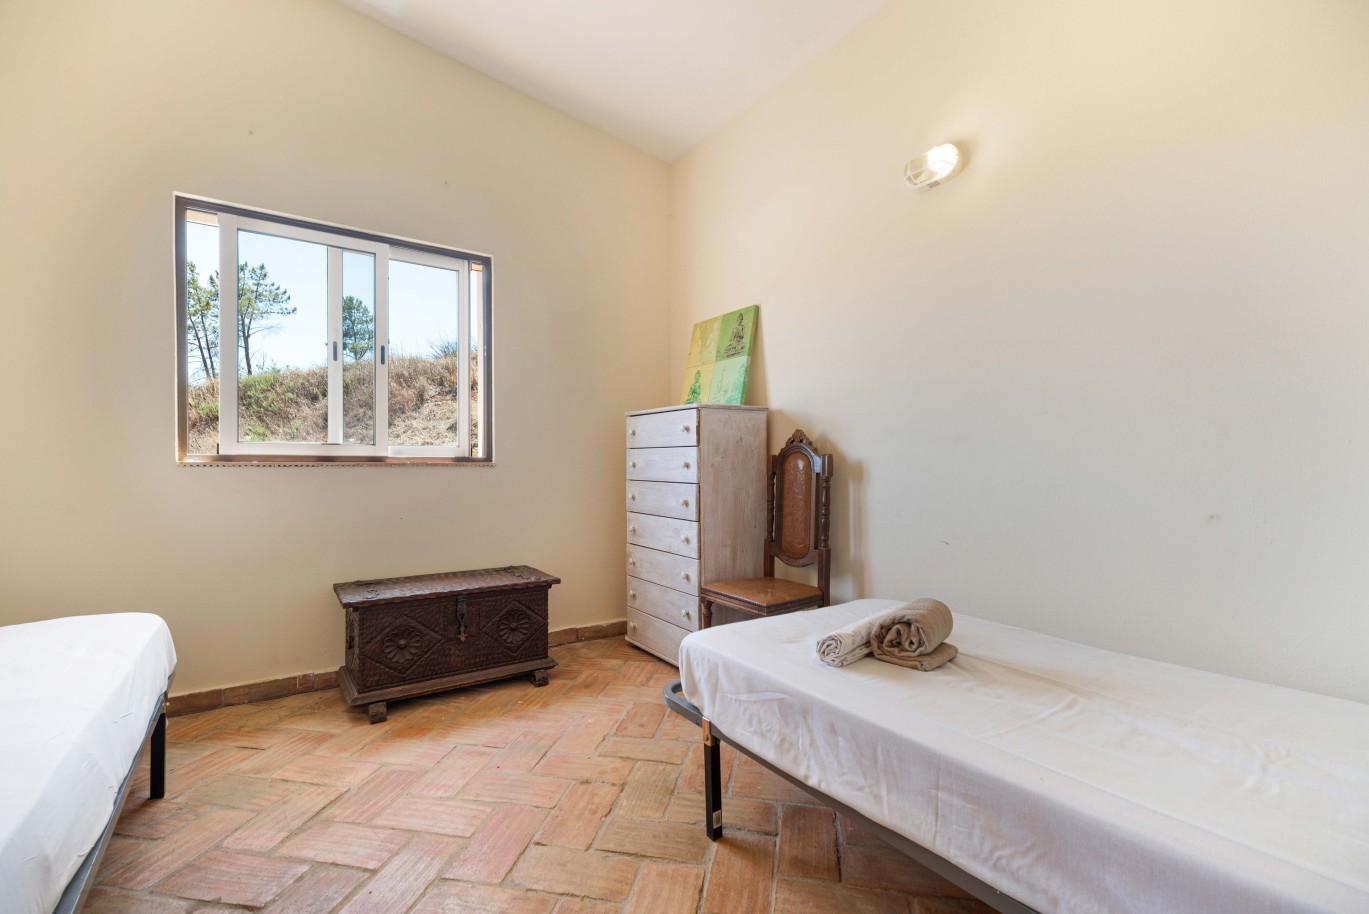 9 bedroom villa for sale in Pereira, Algarve_231607